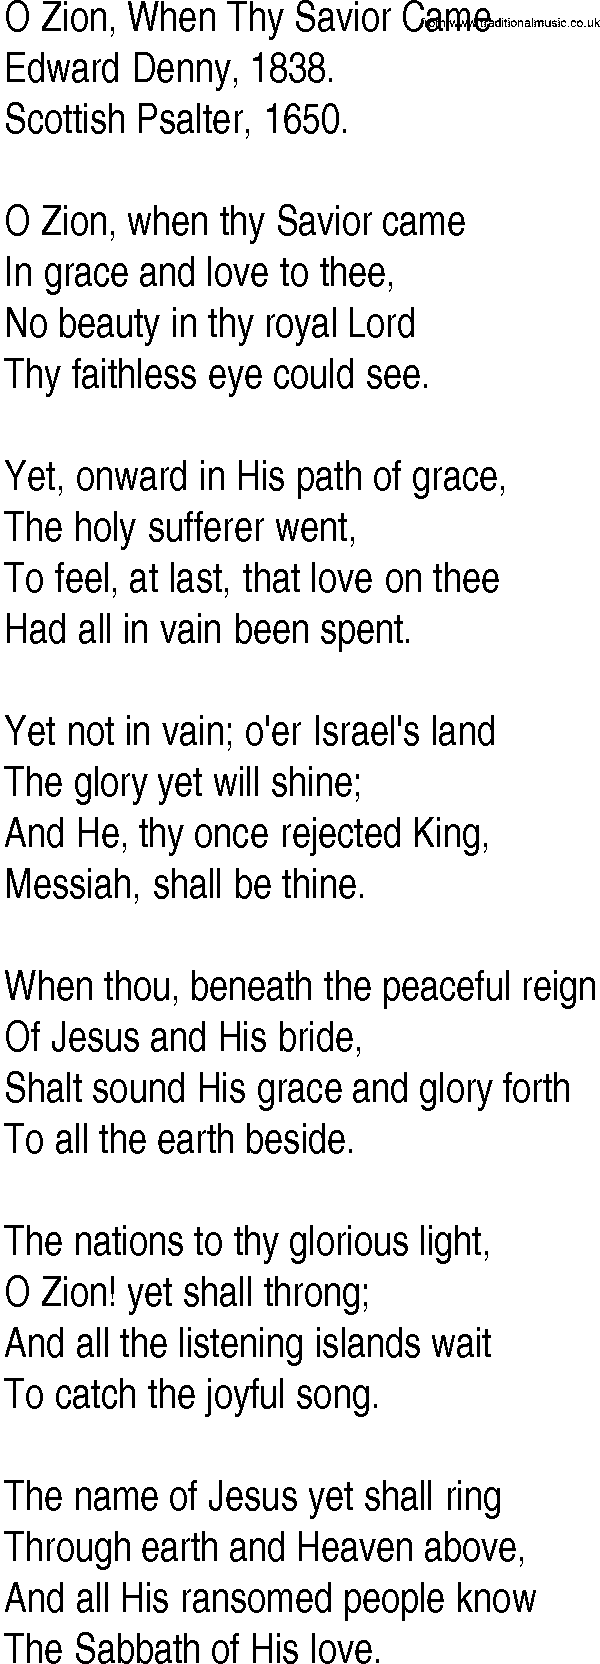 Hymn and Gospel Song: O Zion, When Thy Savior Came by Edward Denny lyrics